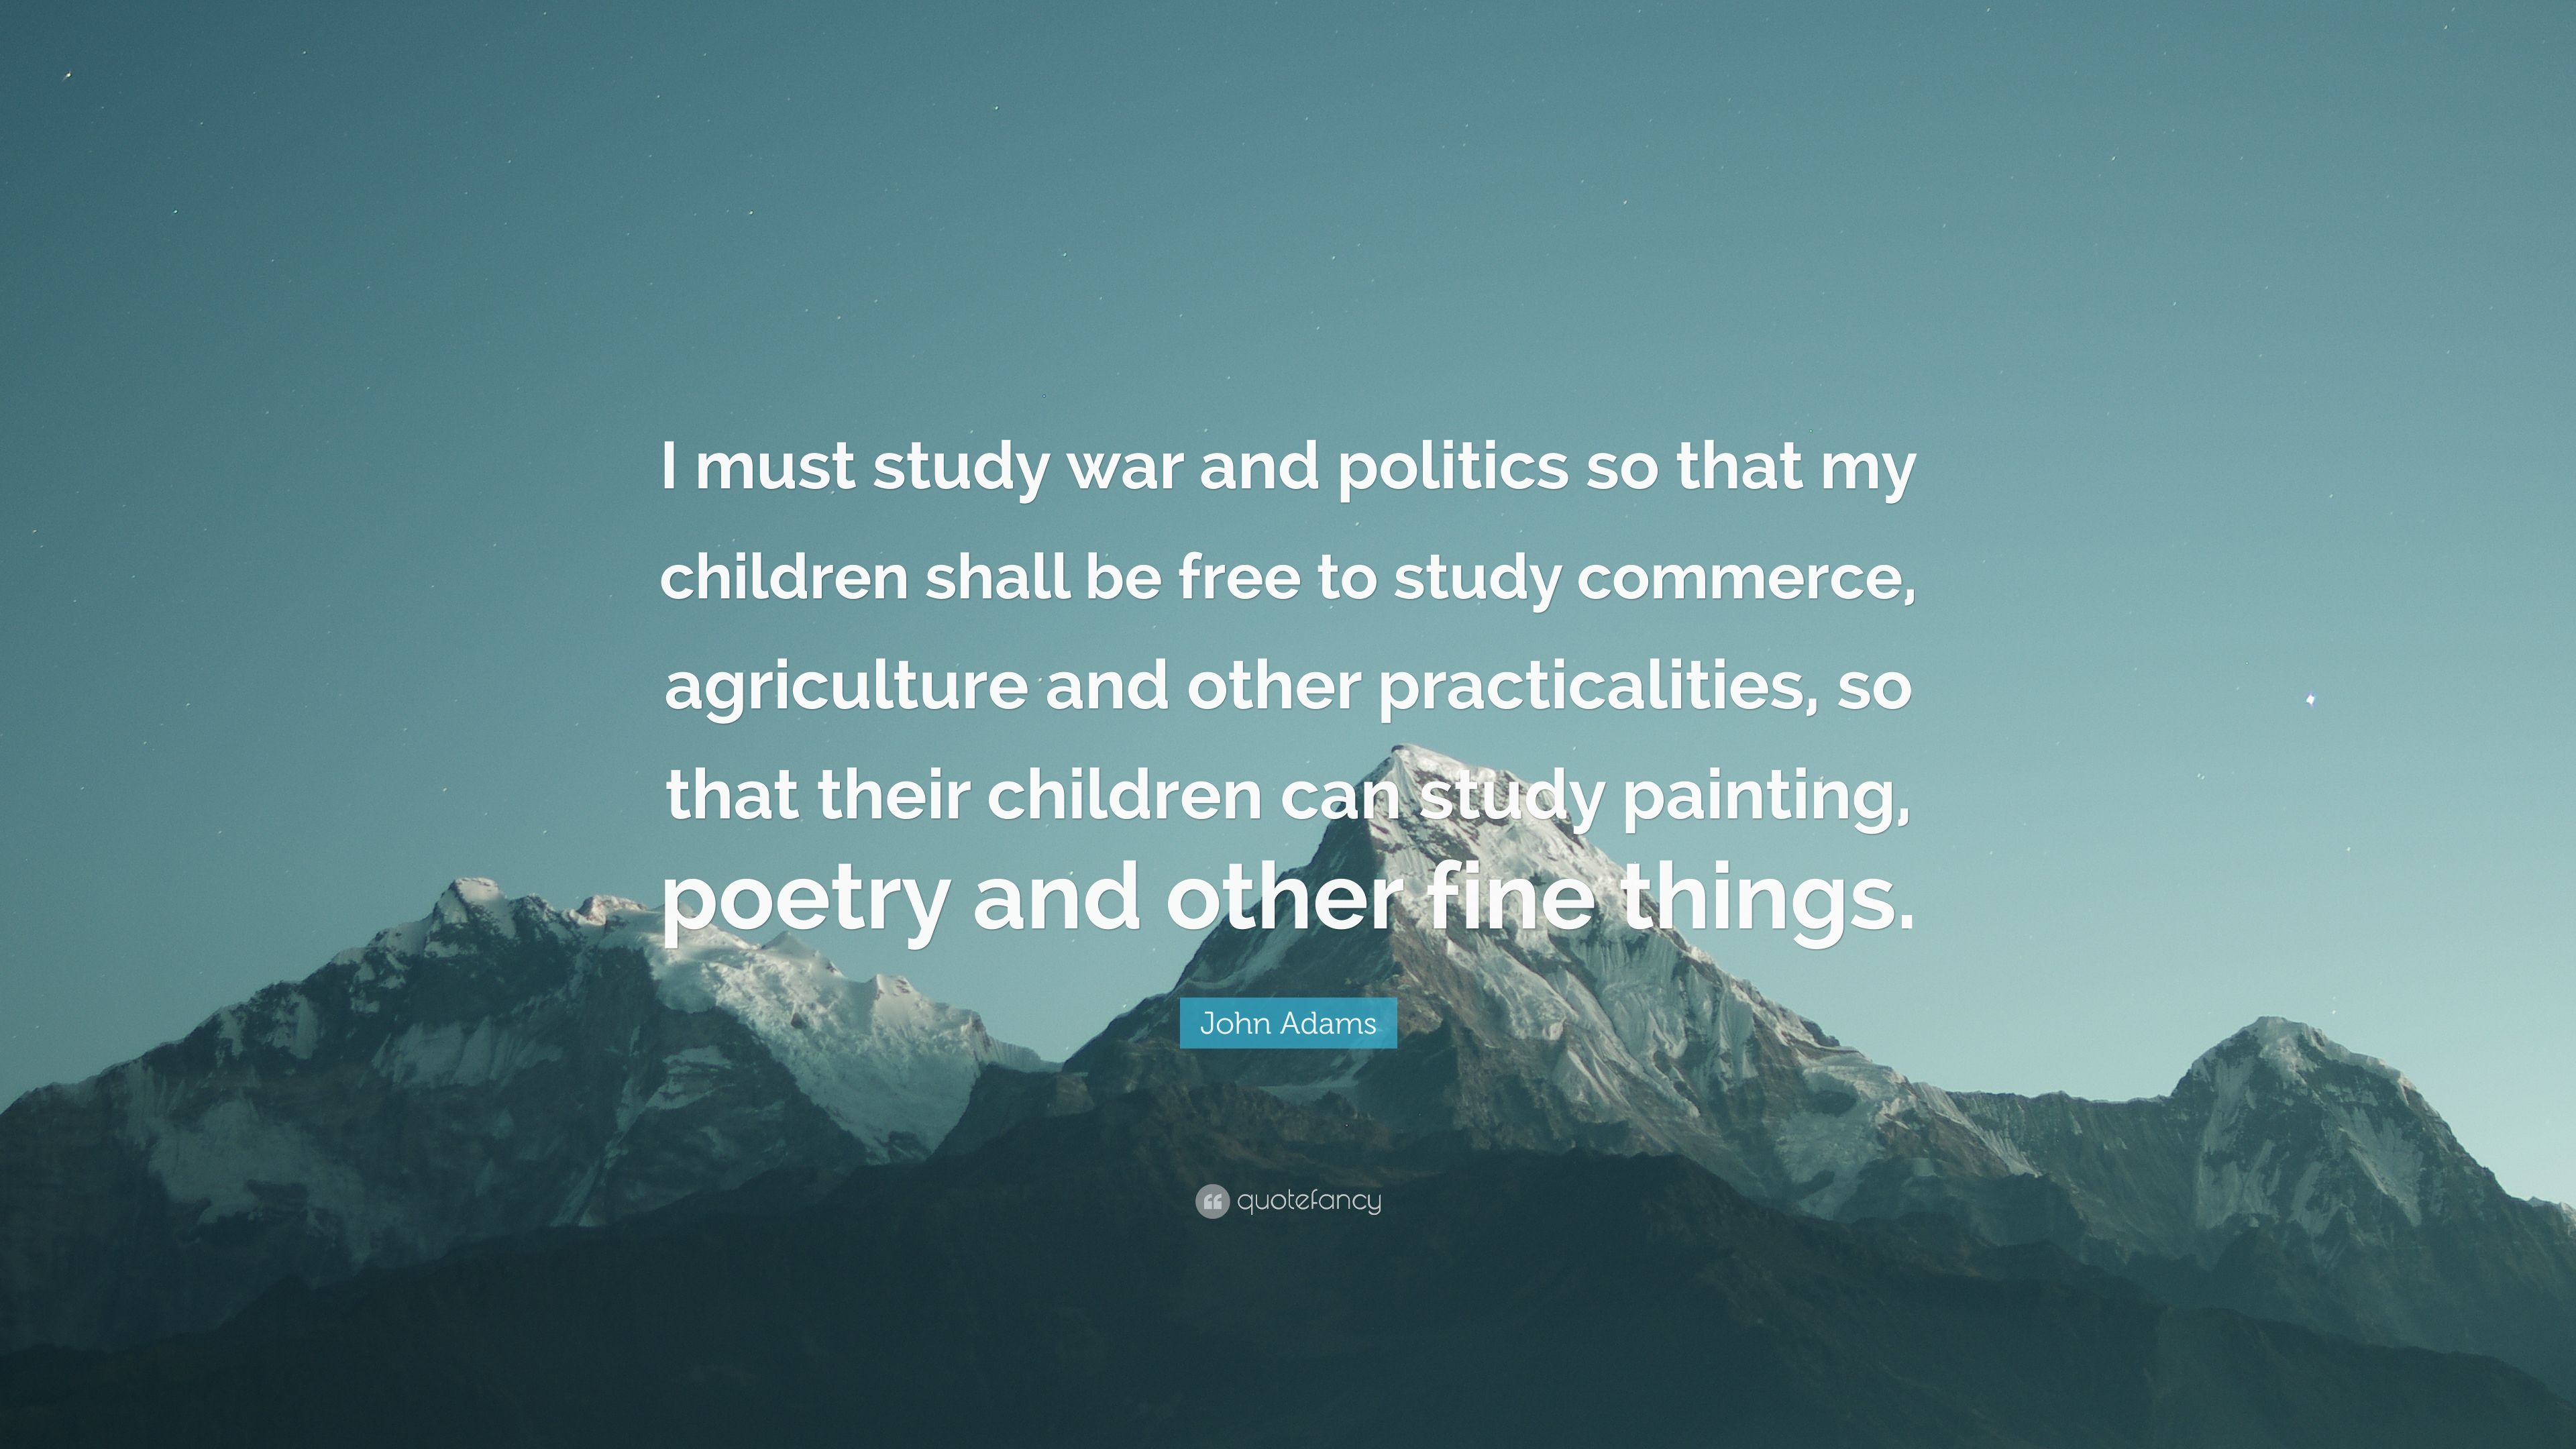 John Adams Quote: “I must study war and .quotefancy.com